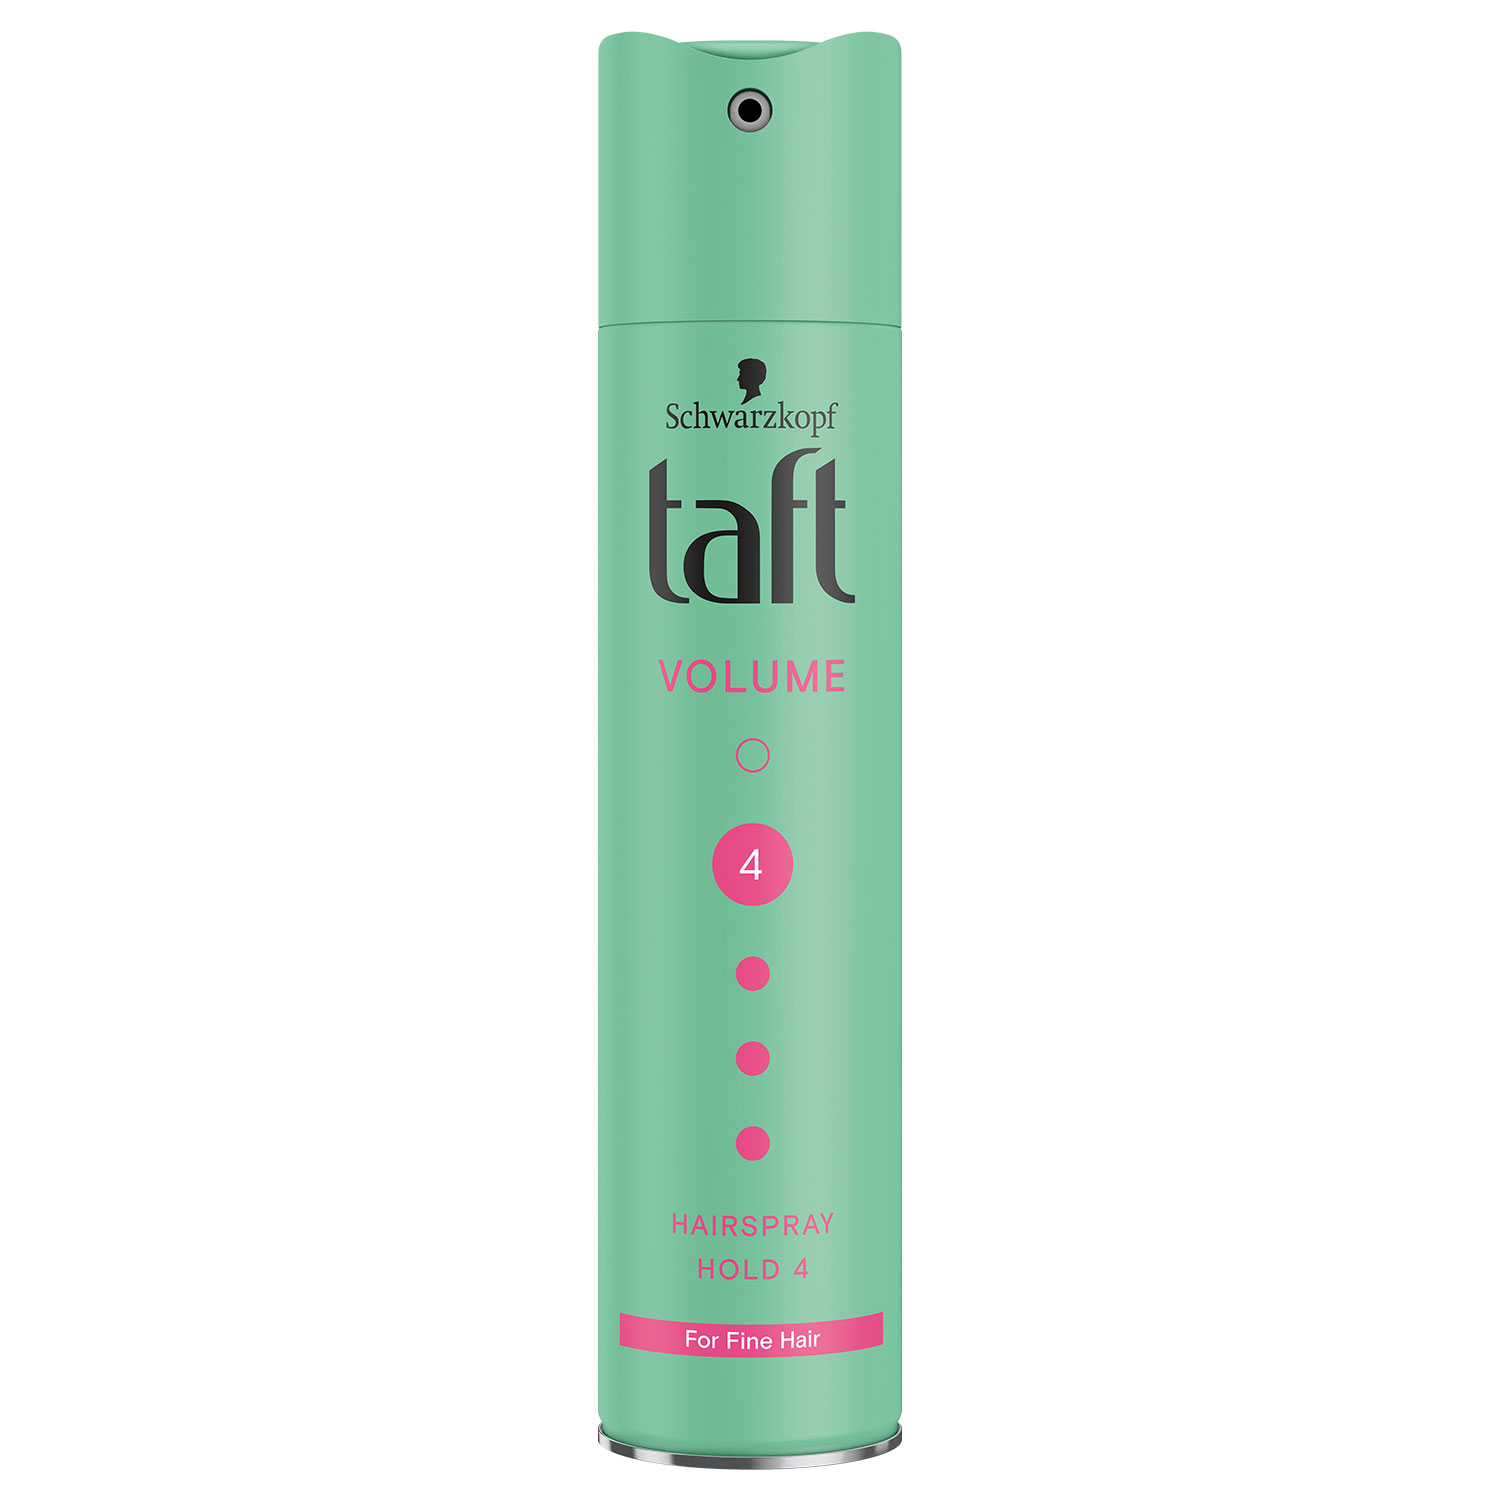 Hairspray Taft Volume 4 250ml